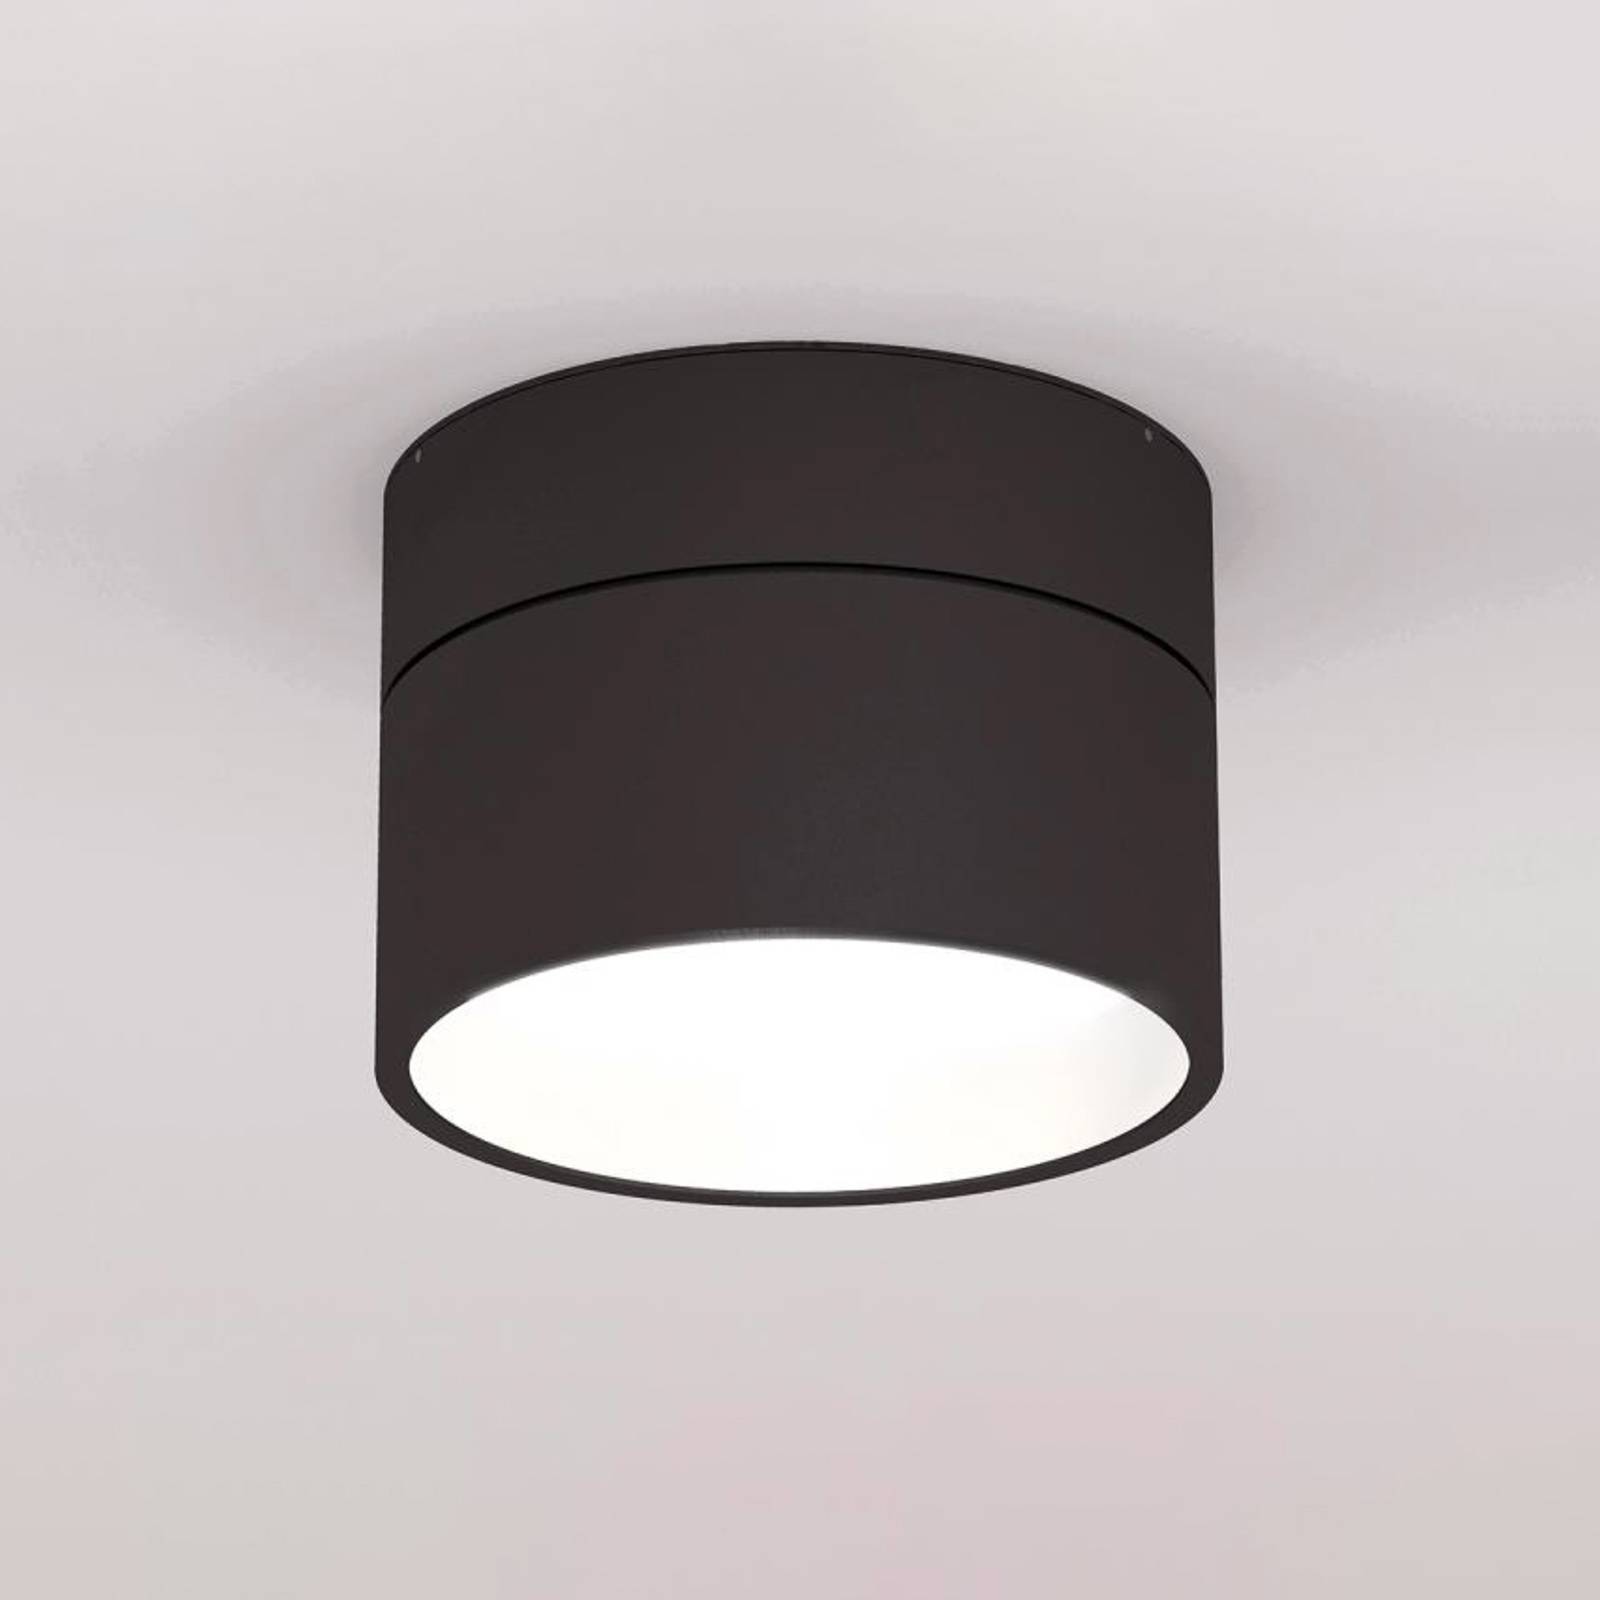 LOUM Turn ON LED plafondlamp dim 2700K zwart/wit